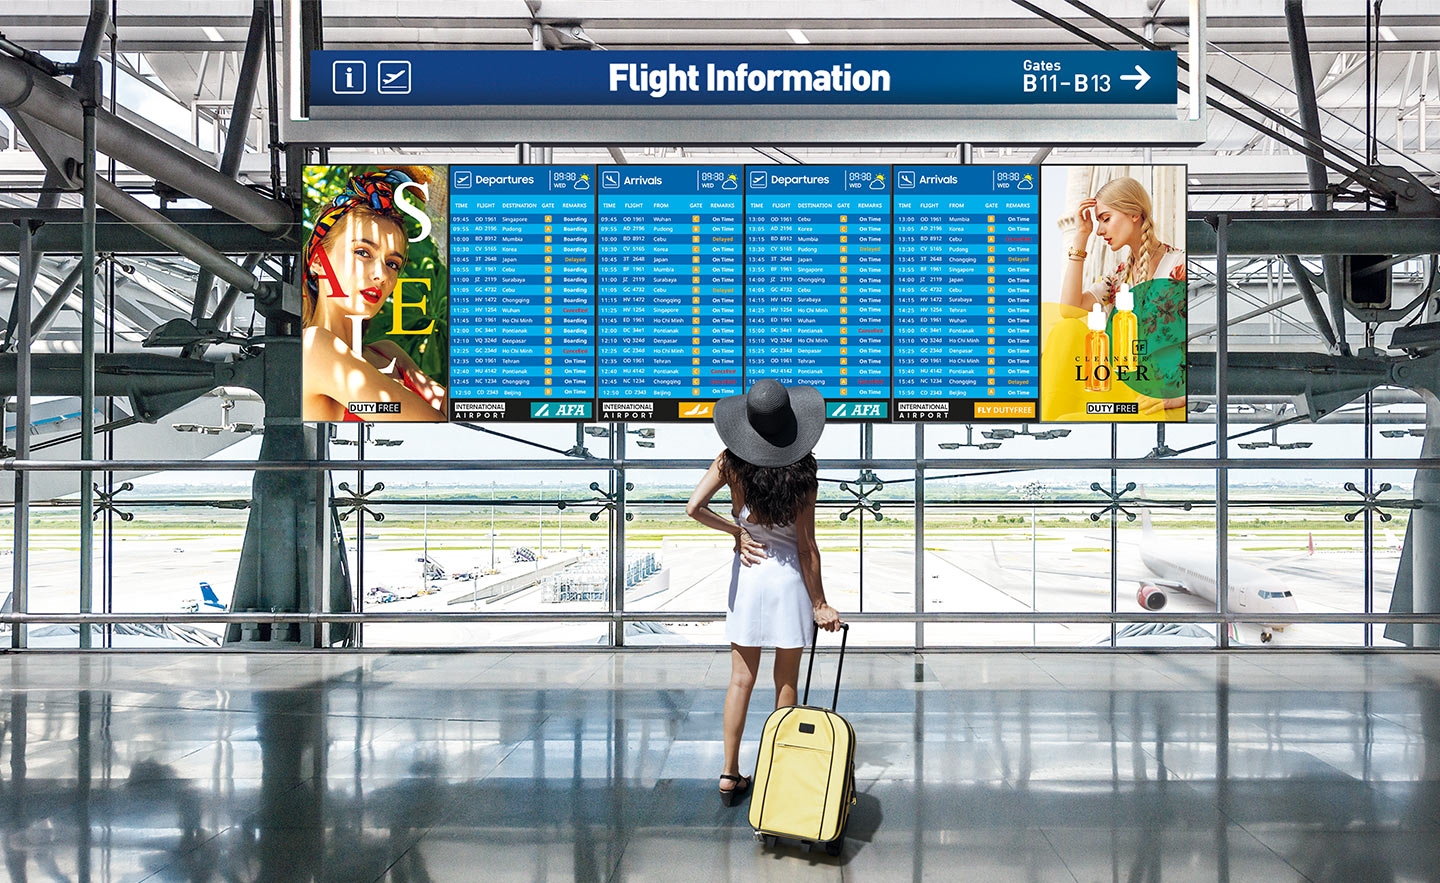 Digital Menu Board used in Airport